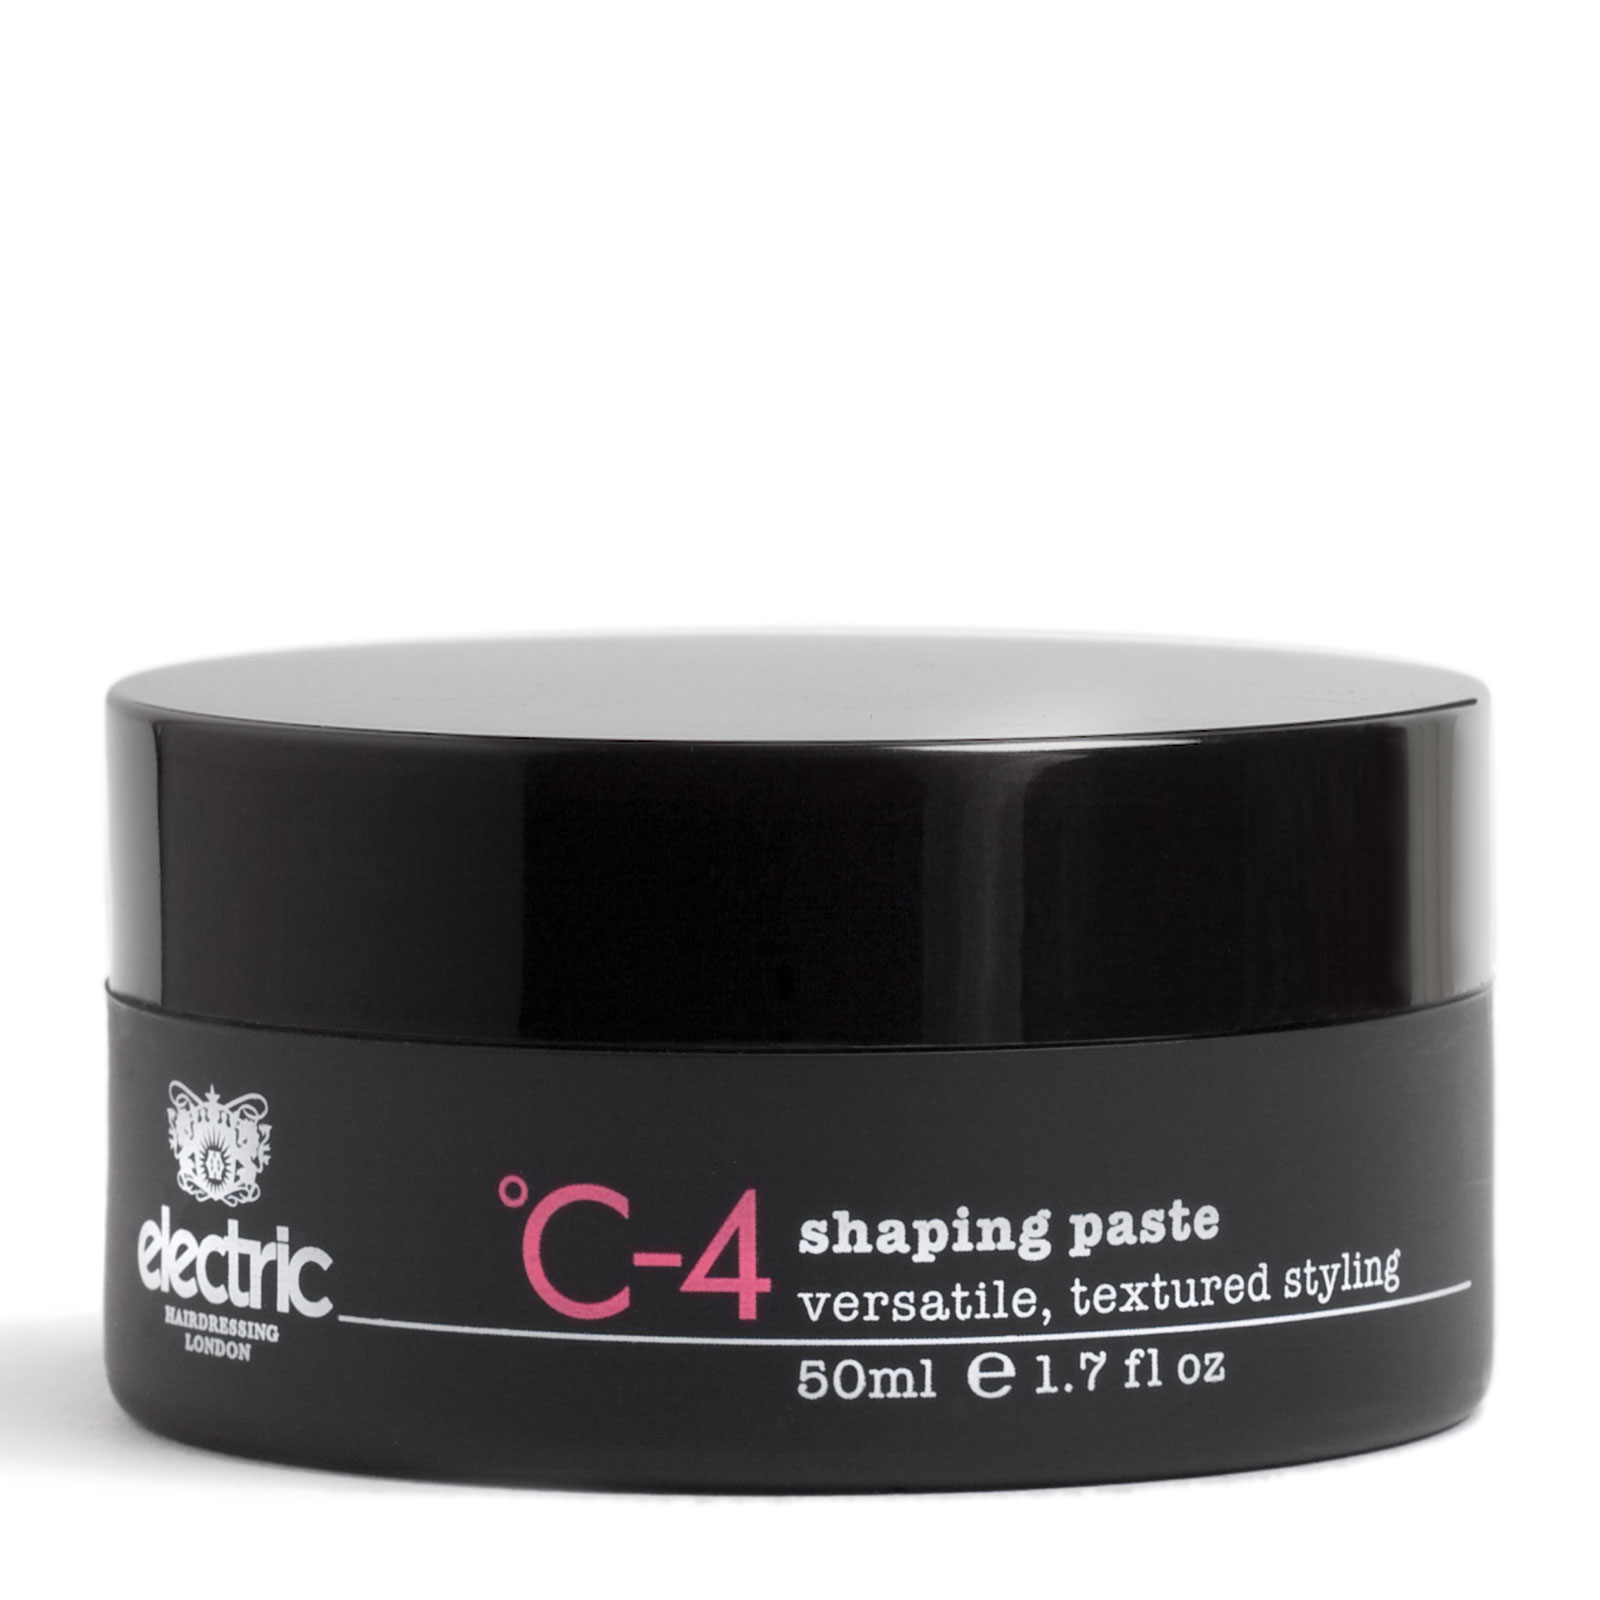 Electric Hair London degC-4 Shaping Paste 50Ml